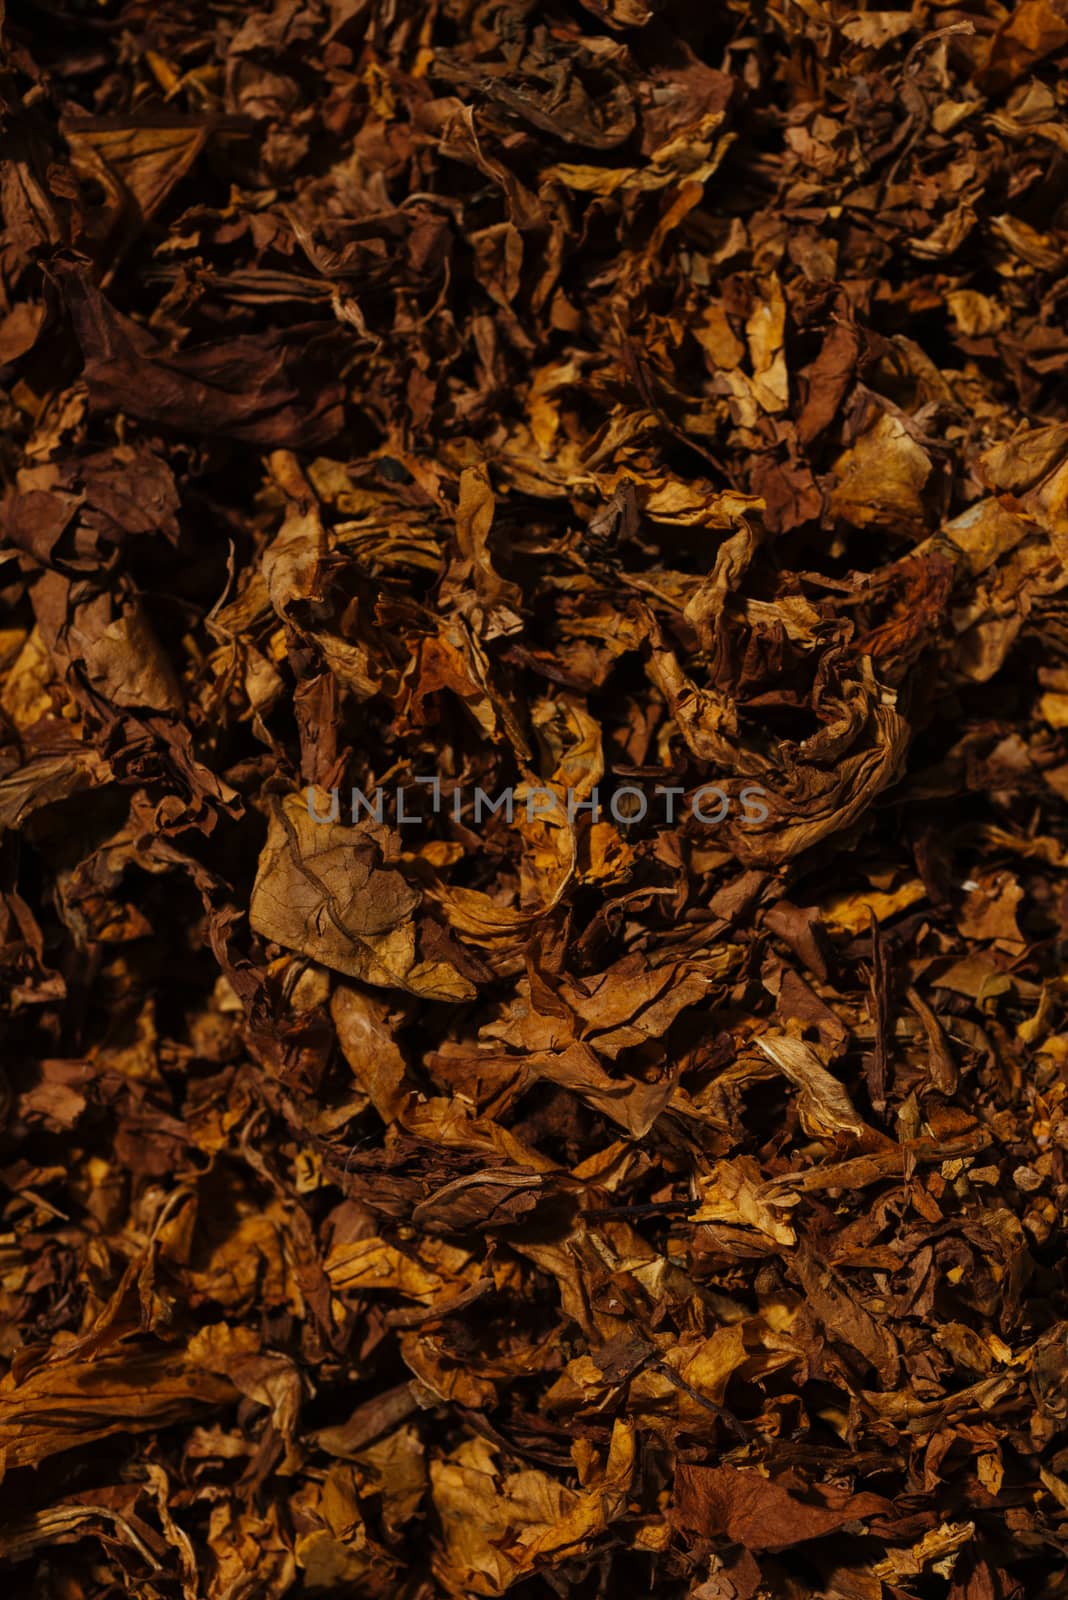 Tobacco background by gorgev